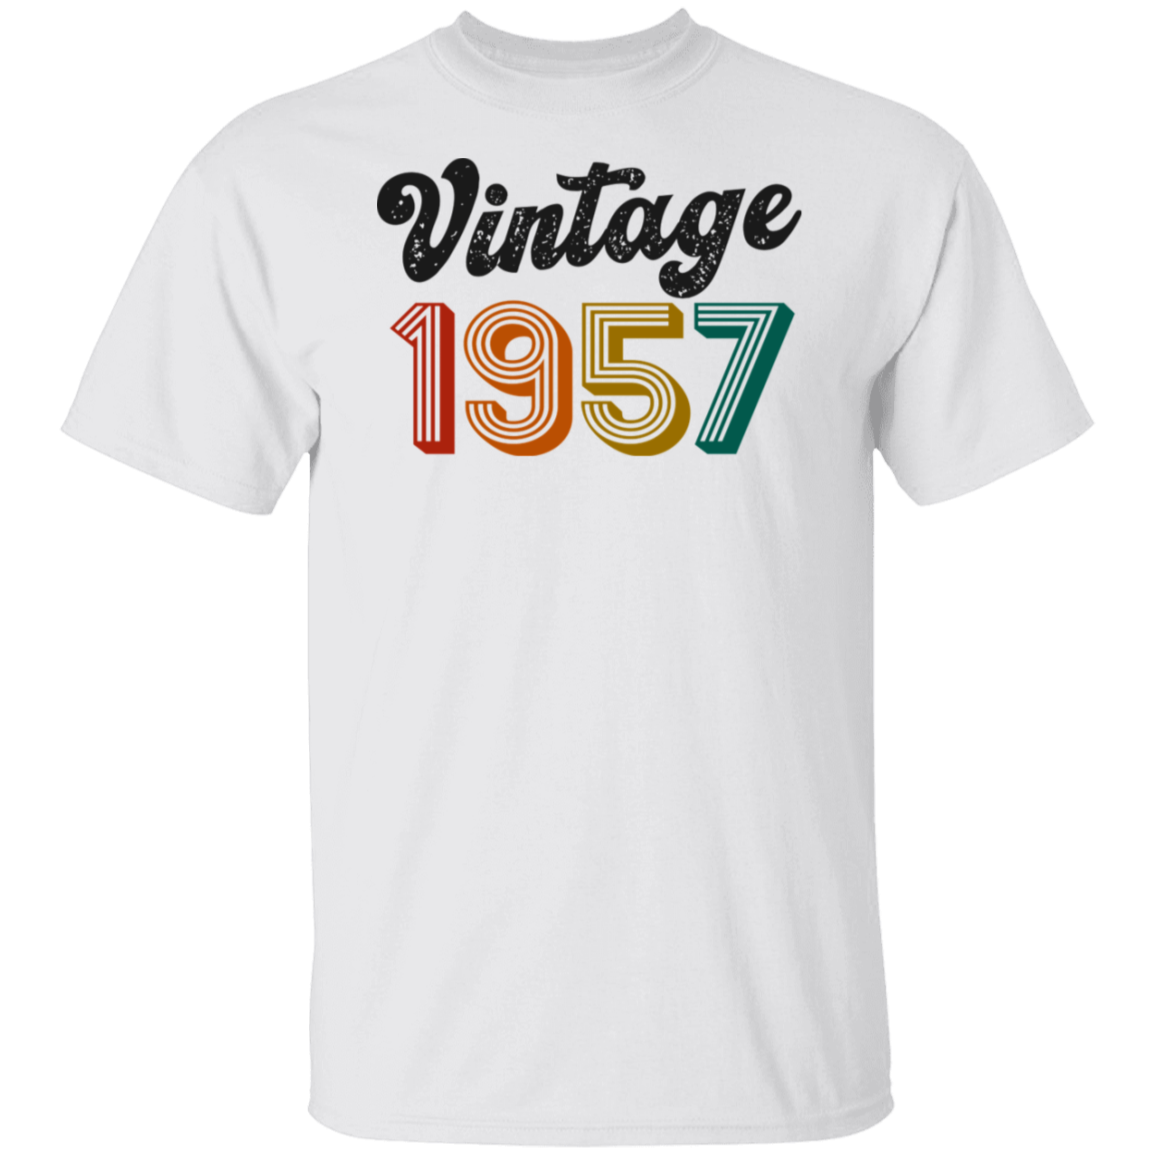 Vintage 1957 T-Shirt